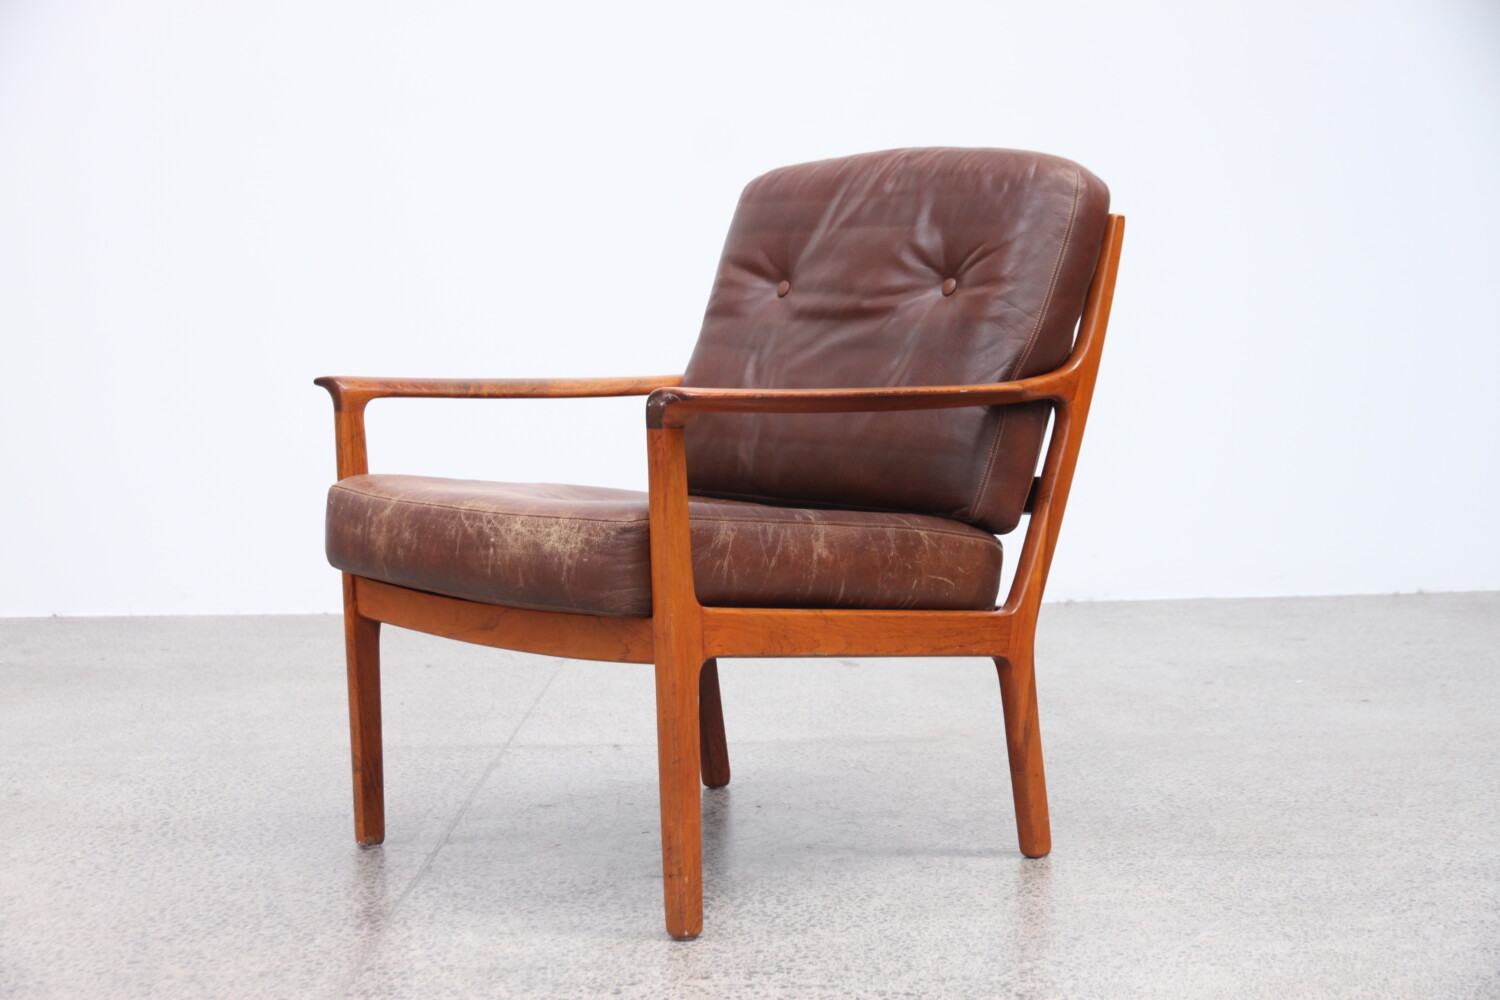 Armchair by Frederik Kayser sold